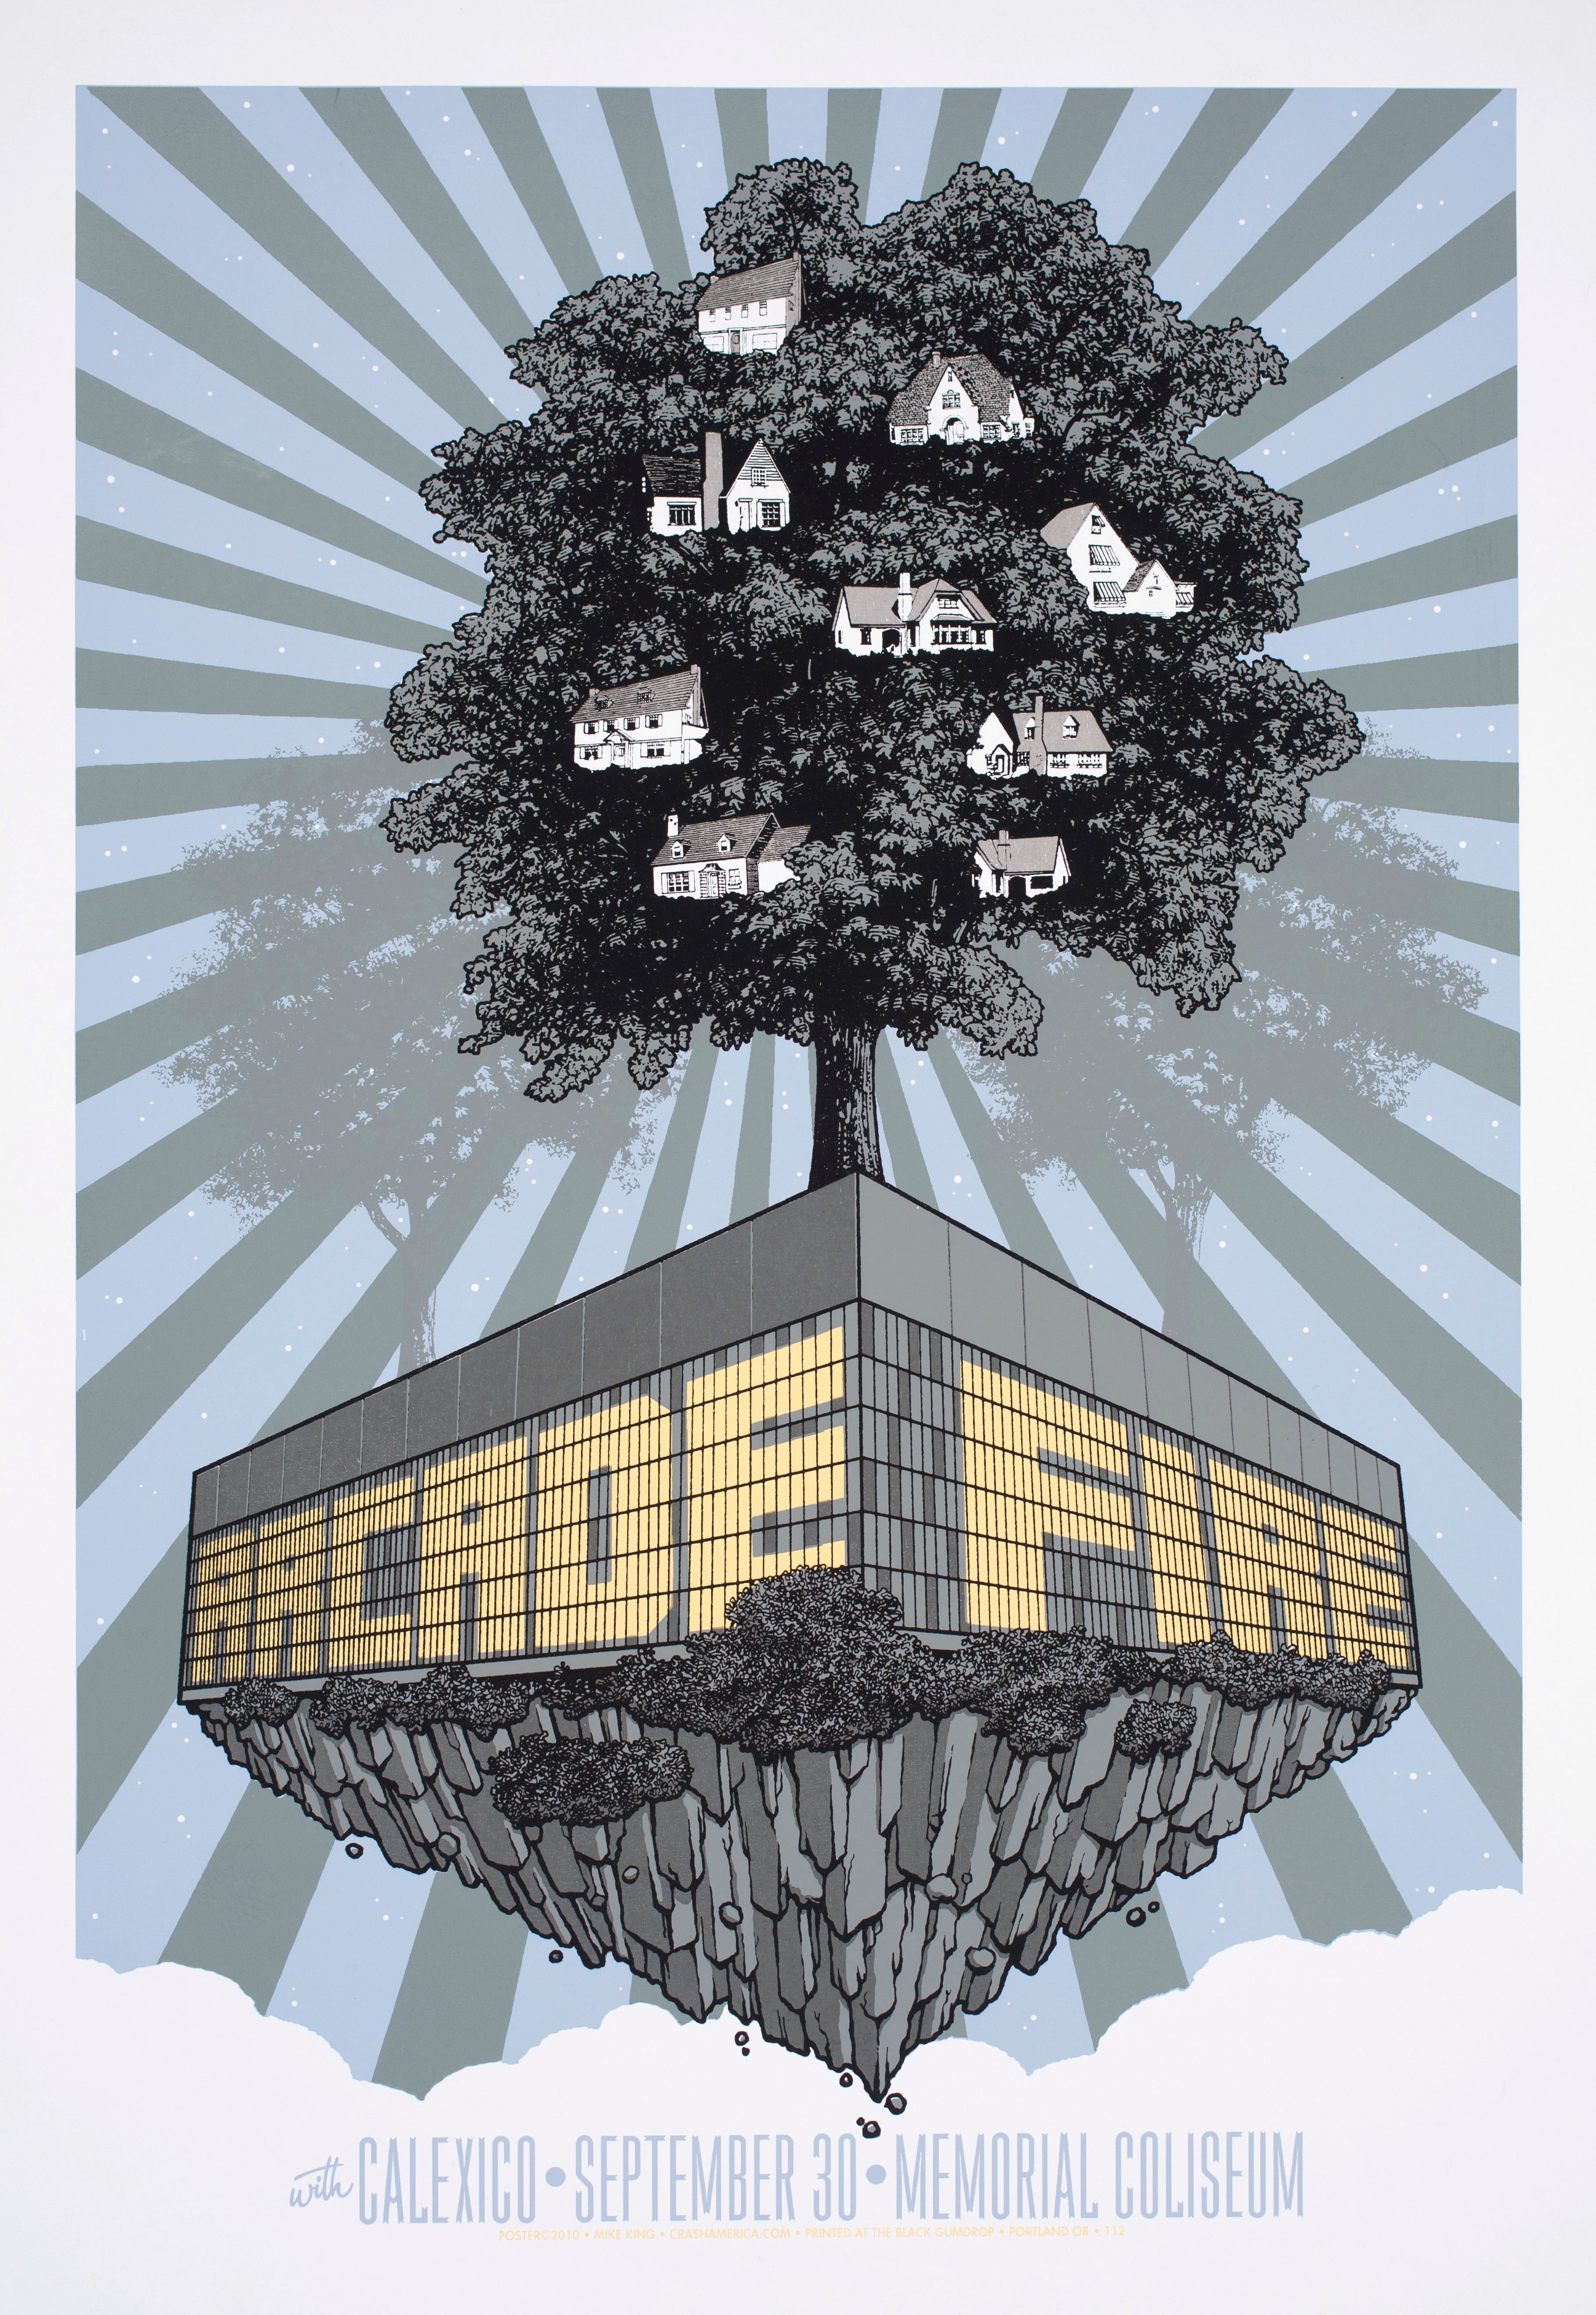 MXP-228.1 Arcade Fire 2010 Memorial Coliseum  Sep 30 Concert Poster